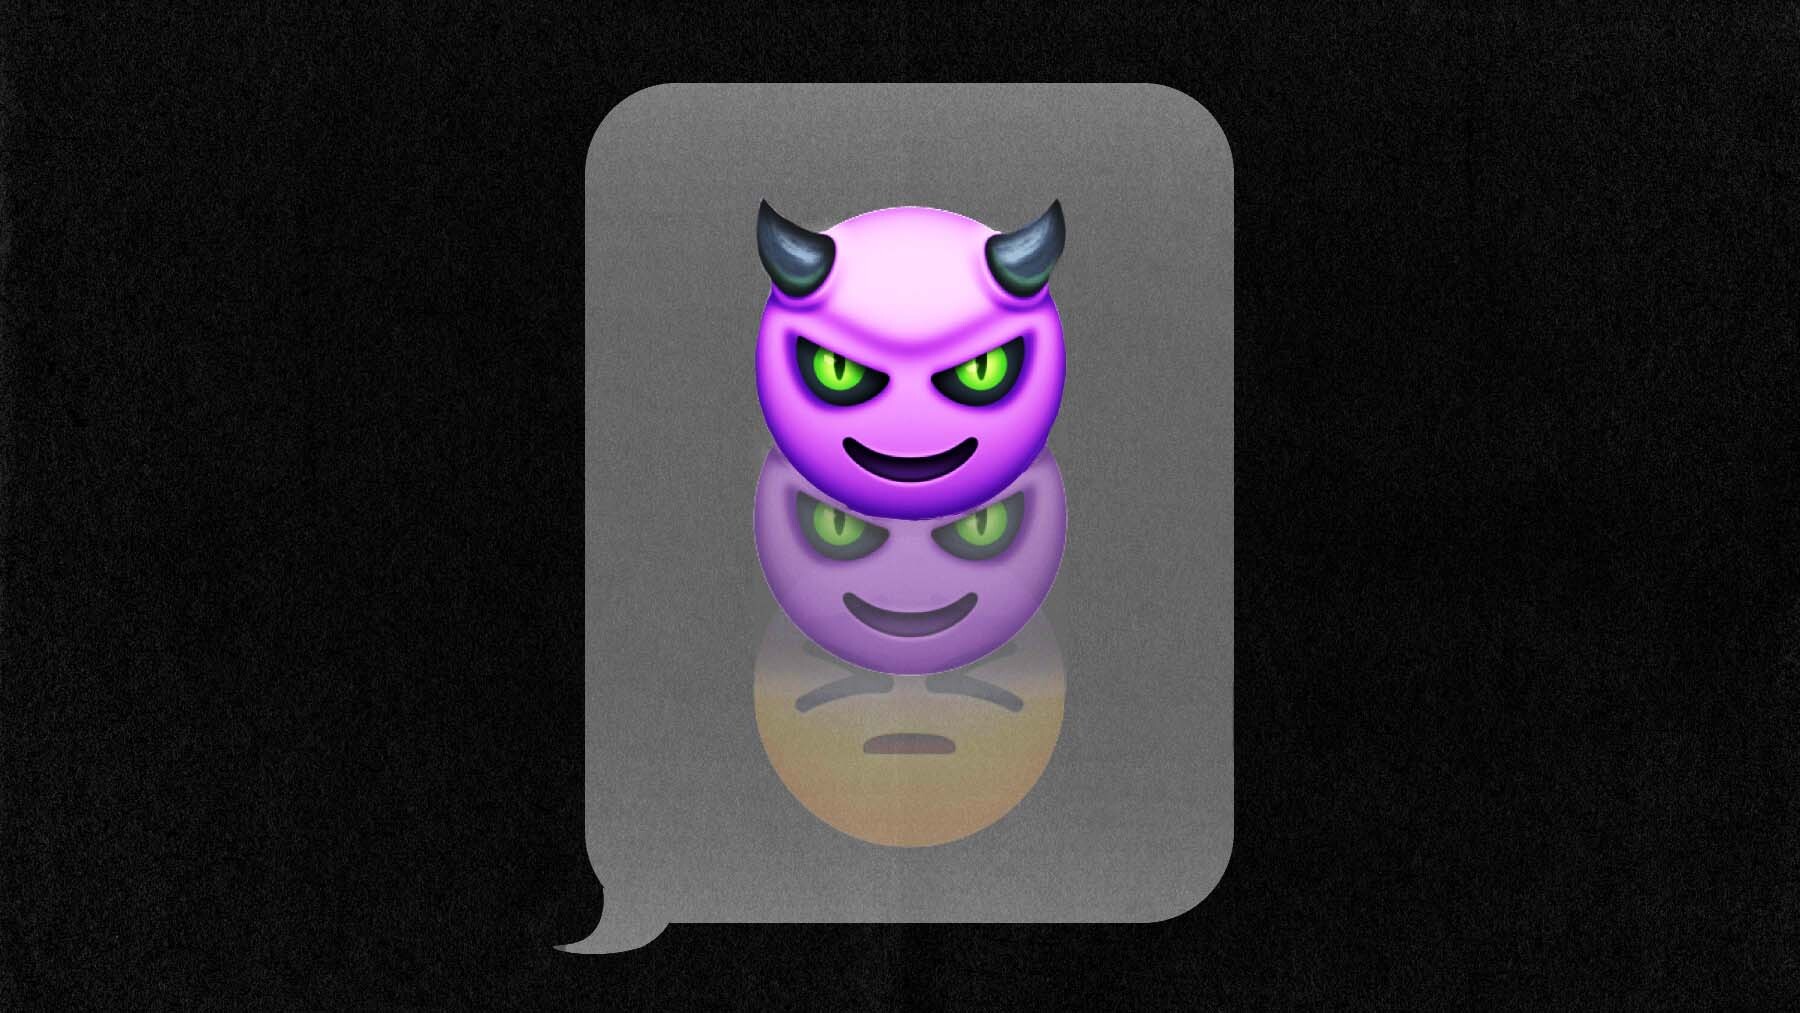 A smiling devil emoji superimposed on a sleeping smiley emoji.